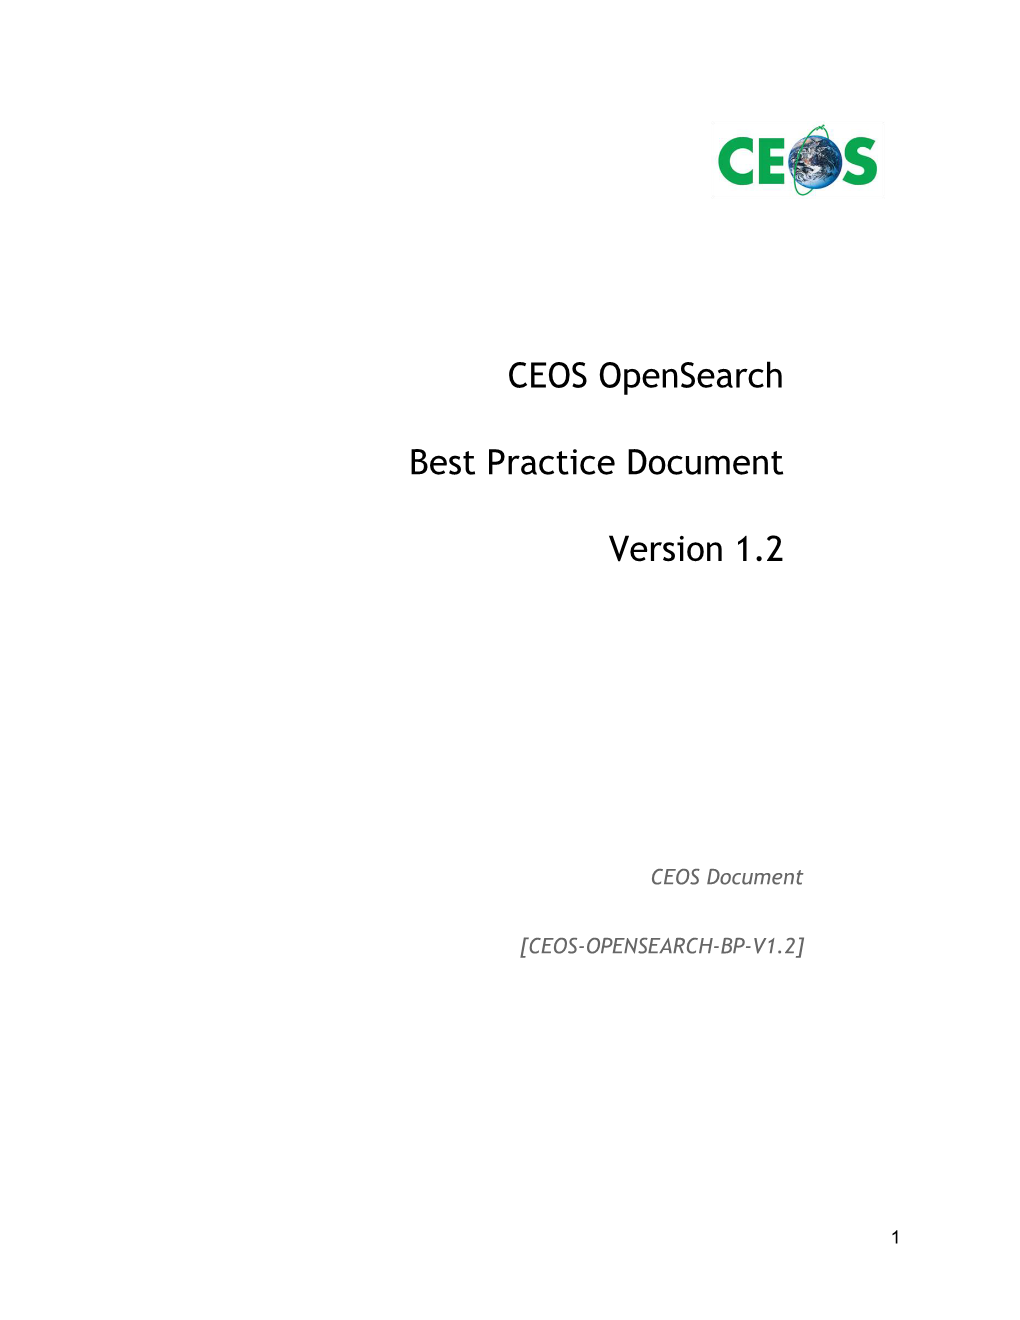 CEOS Opensearch Best Practice Document